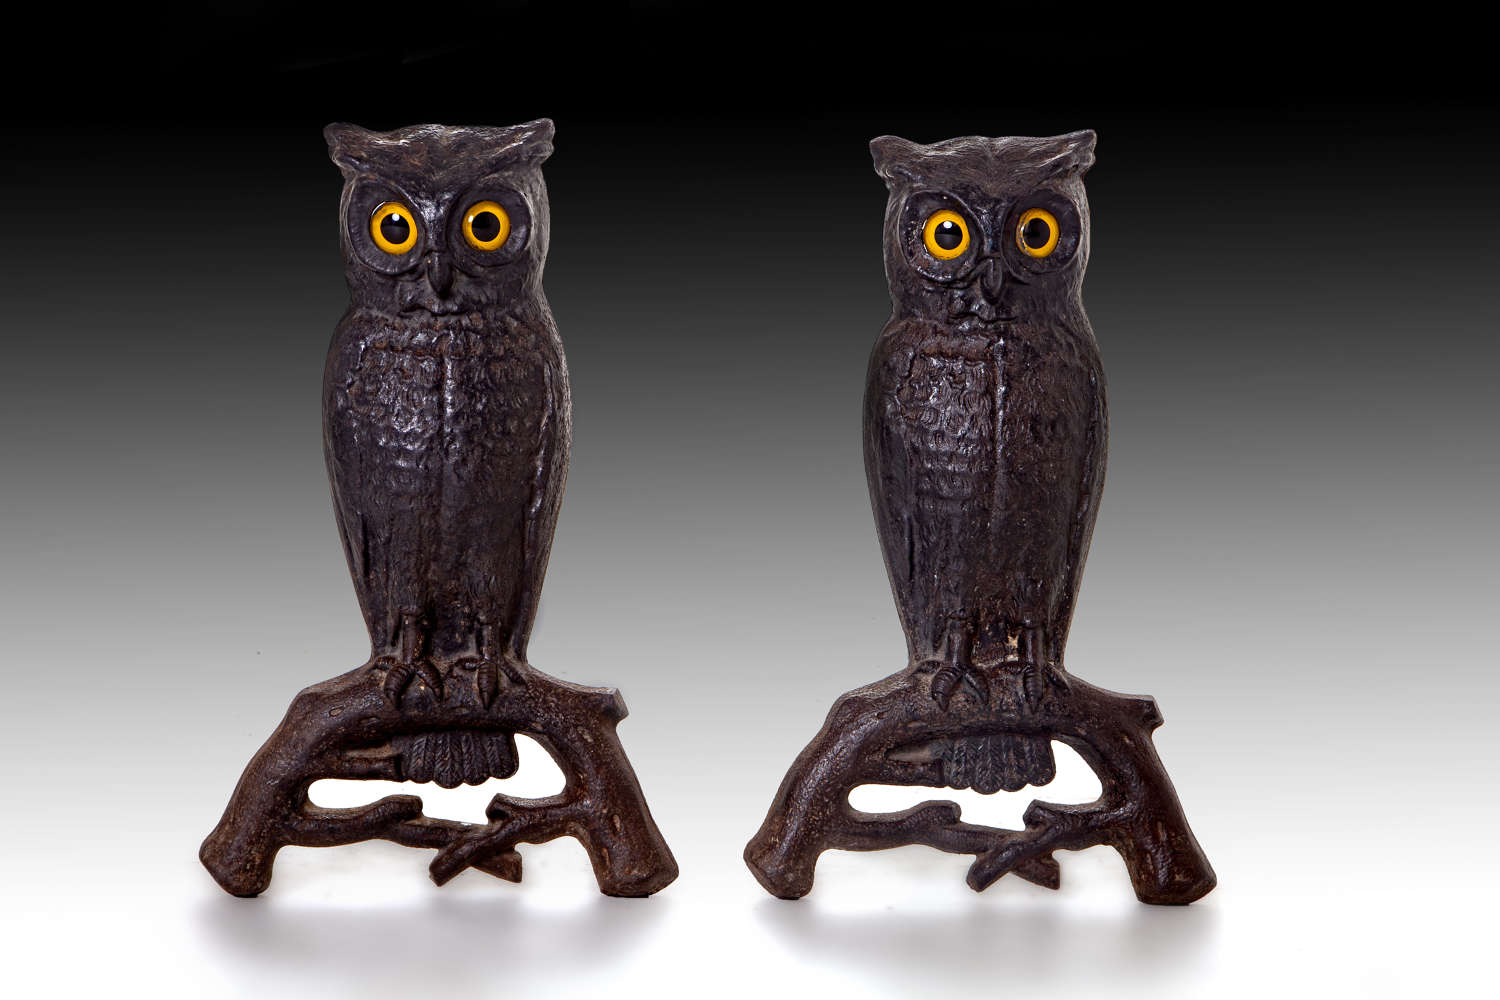 A  wonderful pair of Owl andirons